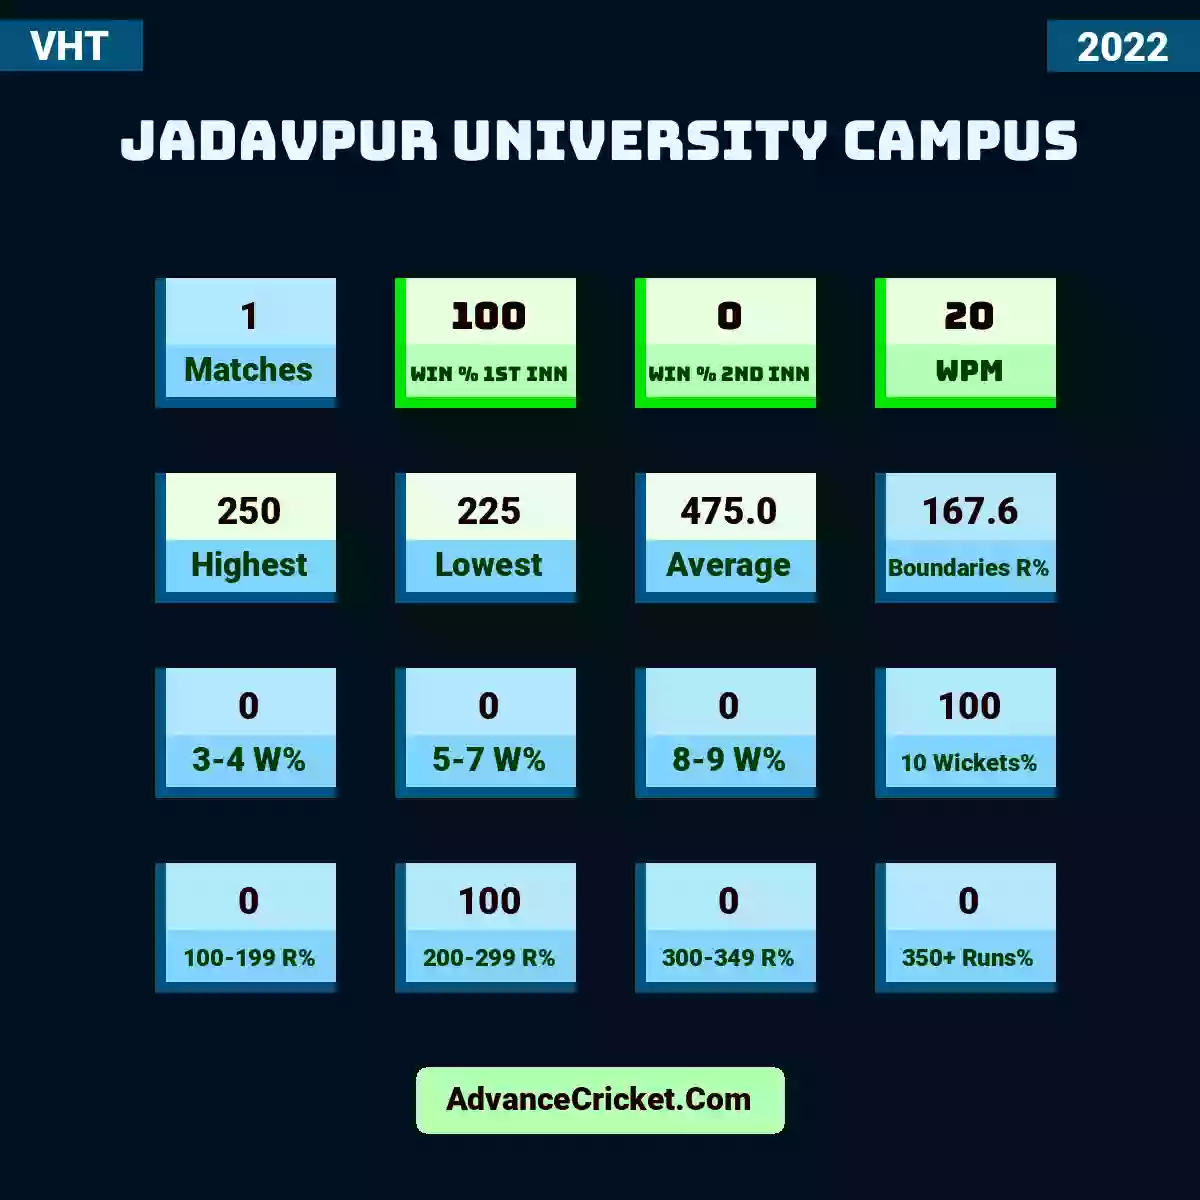 Image showing Jadavpur University Campus with Matches: 1, Win % 1st Inn: 100, Win % 2nd Inn: 0, WPM: 20, Highest: 250, Lowest: 225, Average: 475.0, Boundaries R%: 167.6, 3-4 W%: 0, 5-7 W%: 0, 8-9 W%: 0, 10 Wickets%: 100, 100-199 R%: 0, 200-299 R%: 100, 300-349 R%: 0, 350+ Runs%: 0.